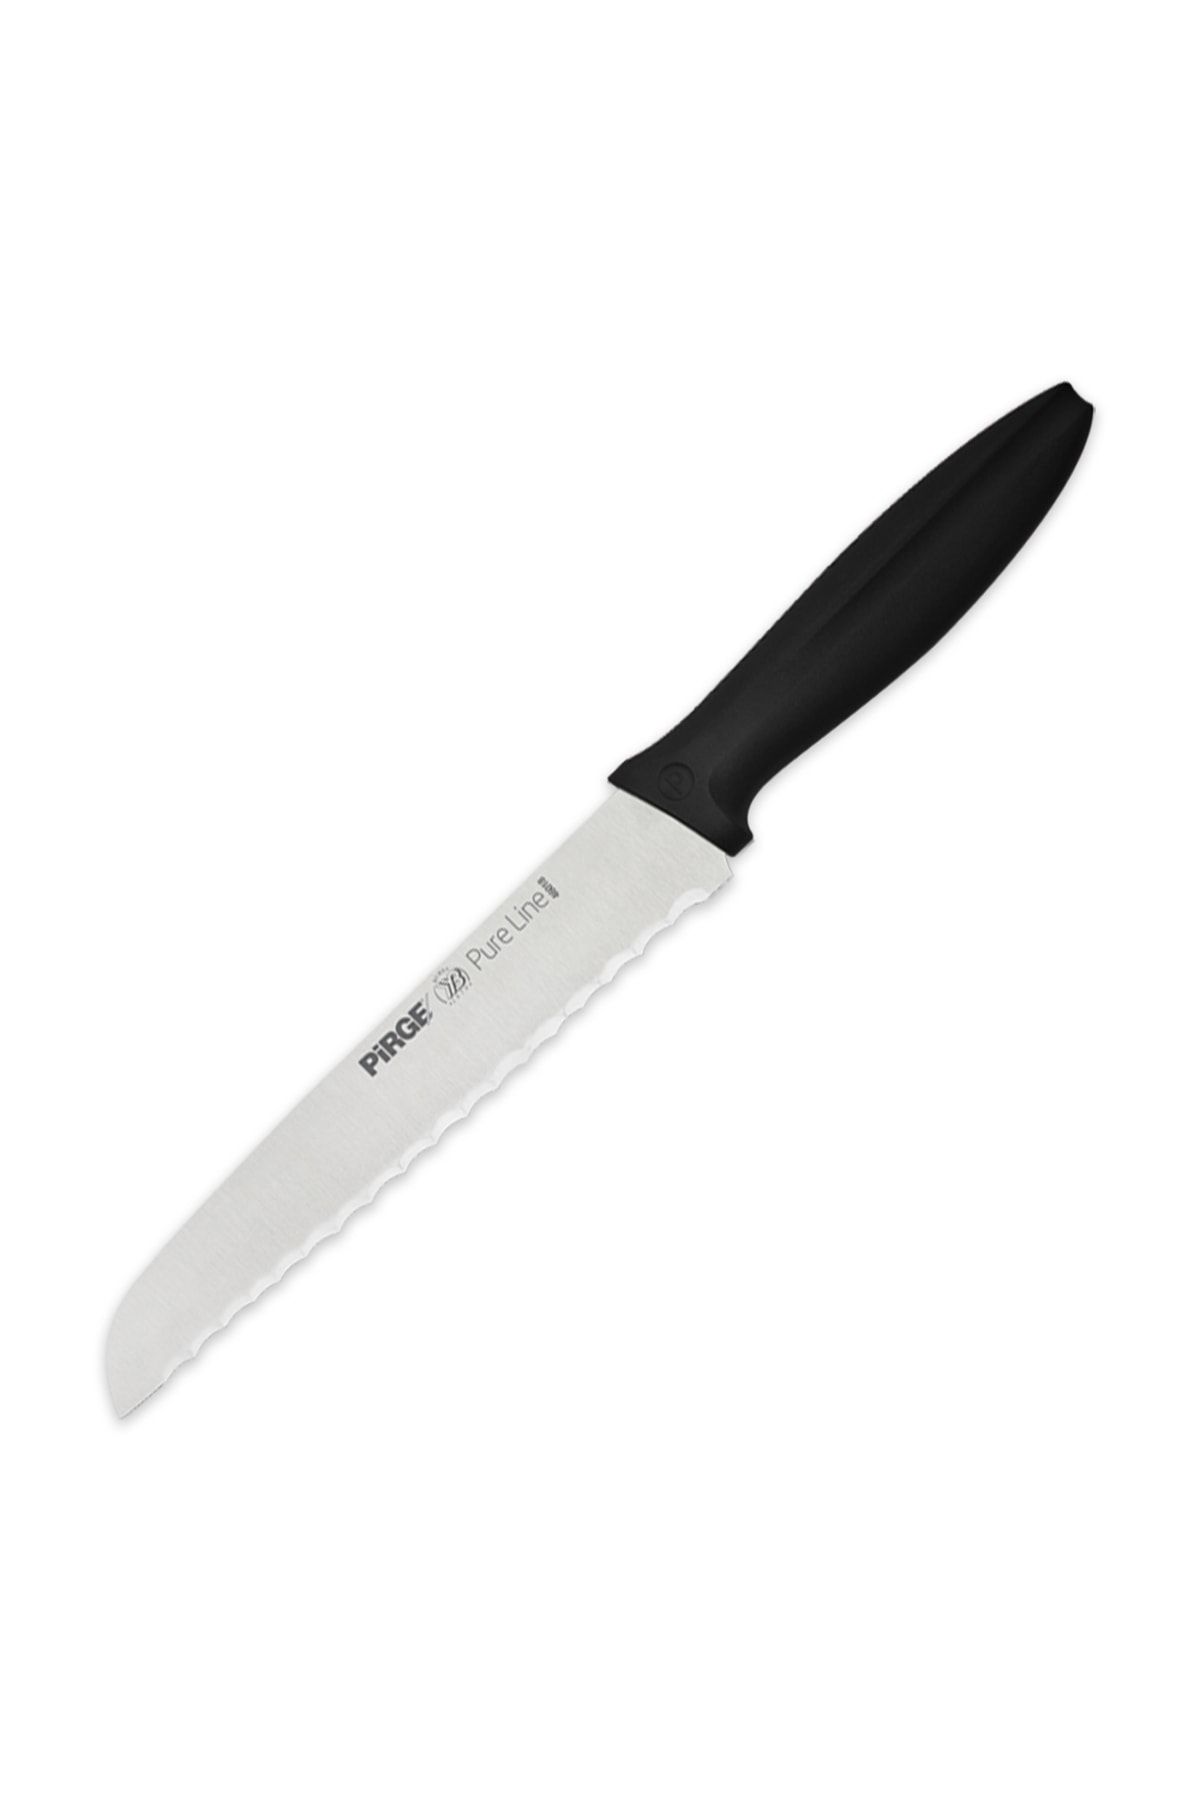 Pirge Pure Line Ekmek Bıçağı 18 cm - 46018